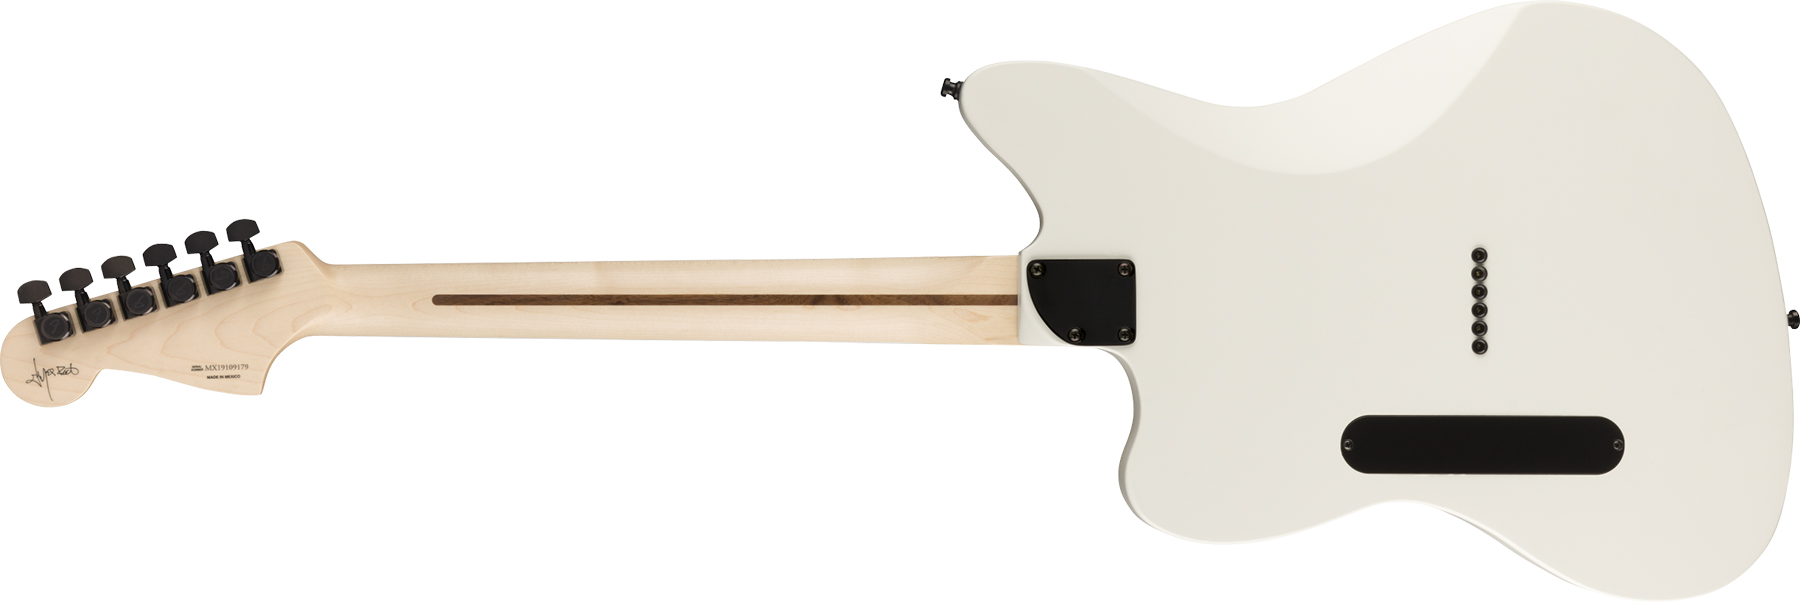 Fender Jim Root Jazzmaster V4 Mex Signature Hh Emg Ht Eb - Artic White - Retro-rock elektrische gitaar - Variation 1